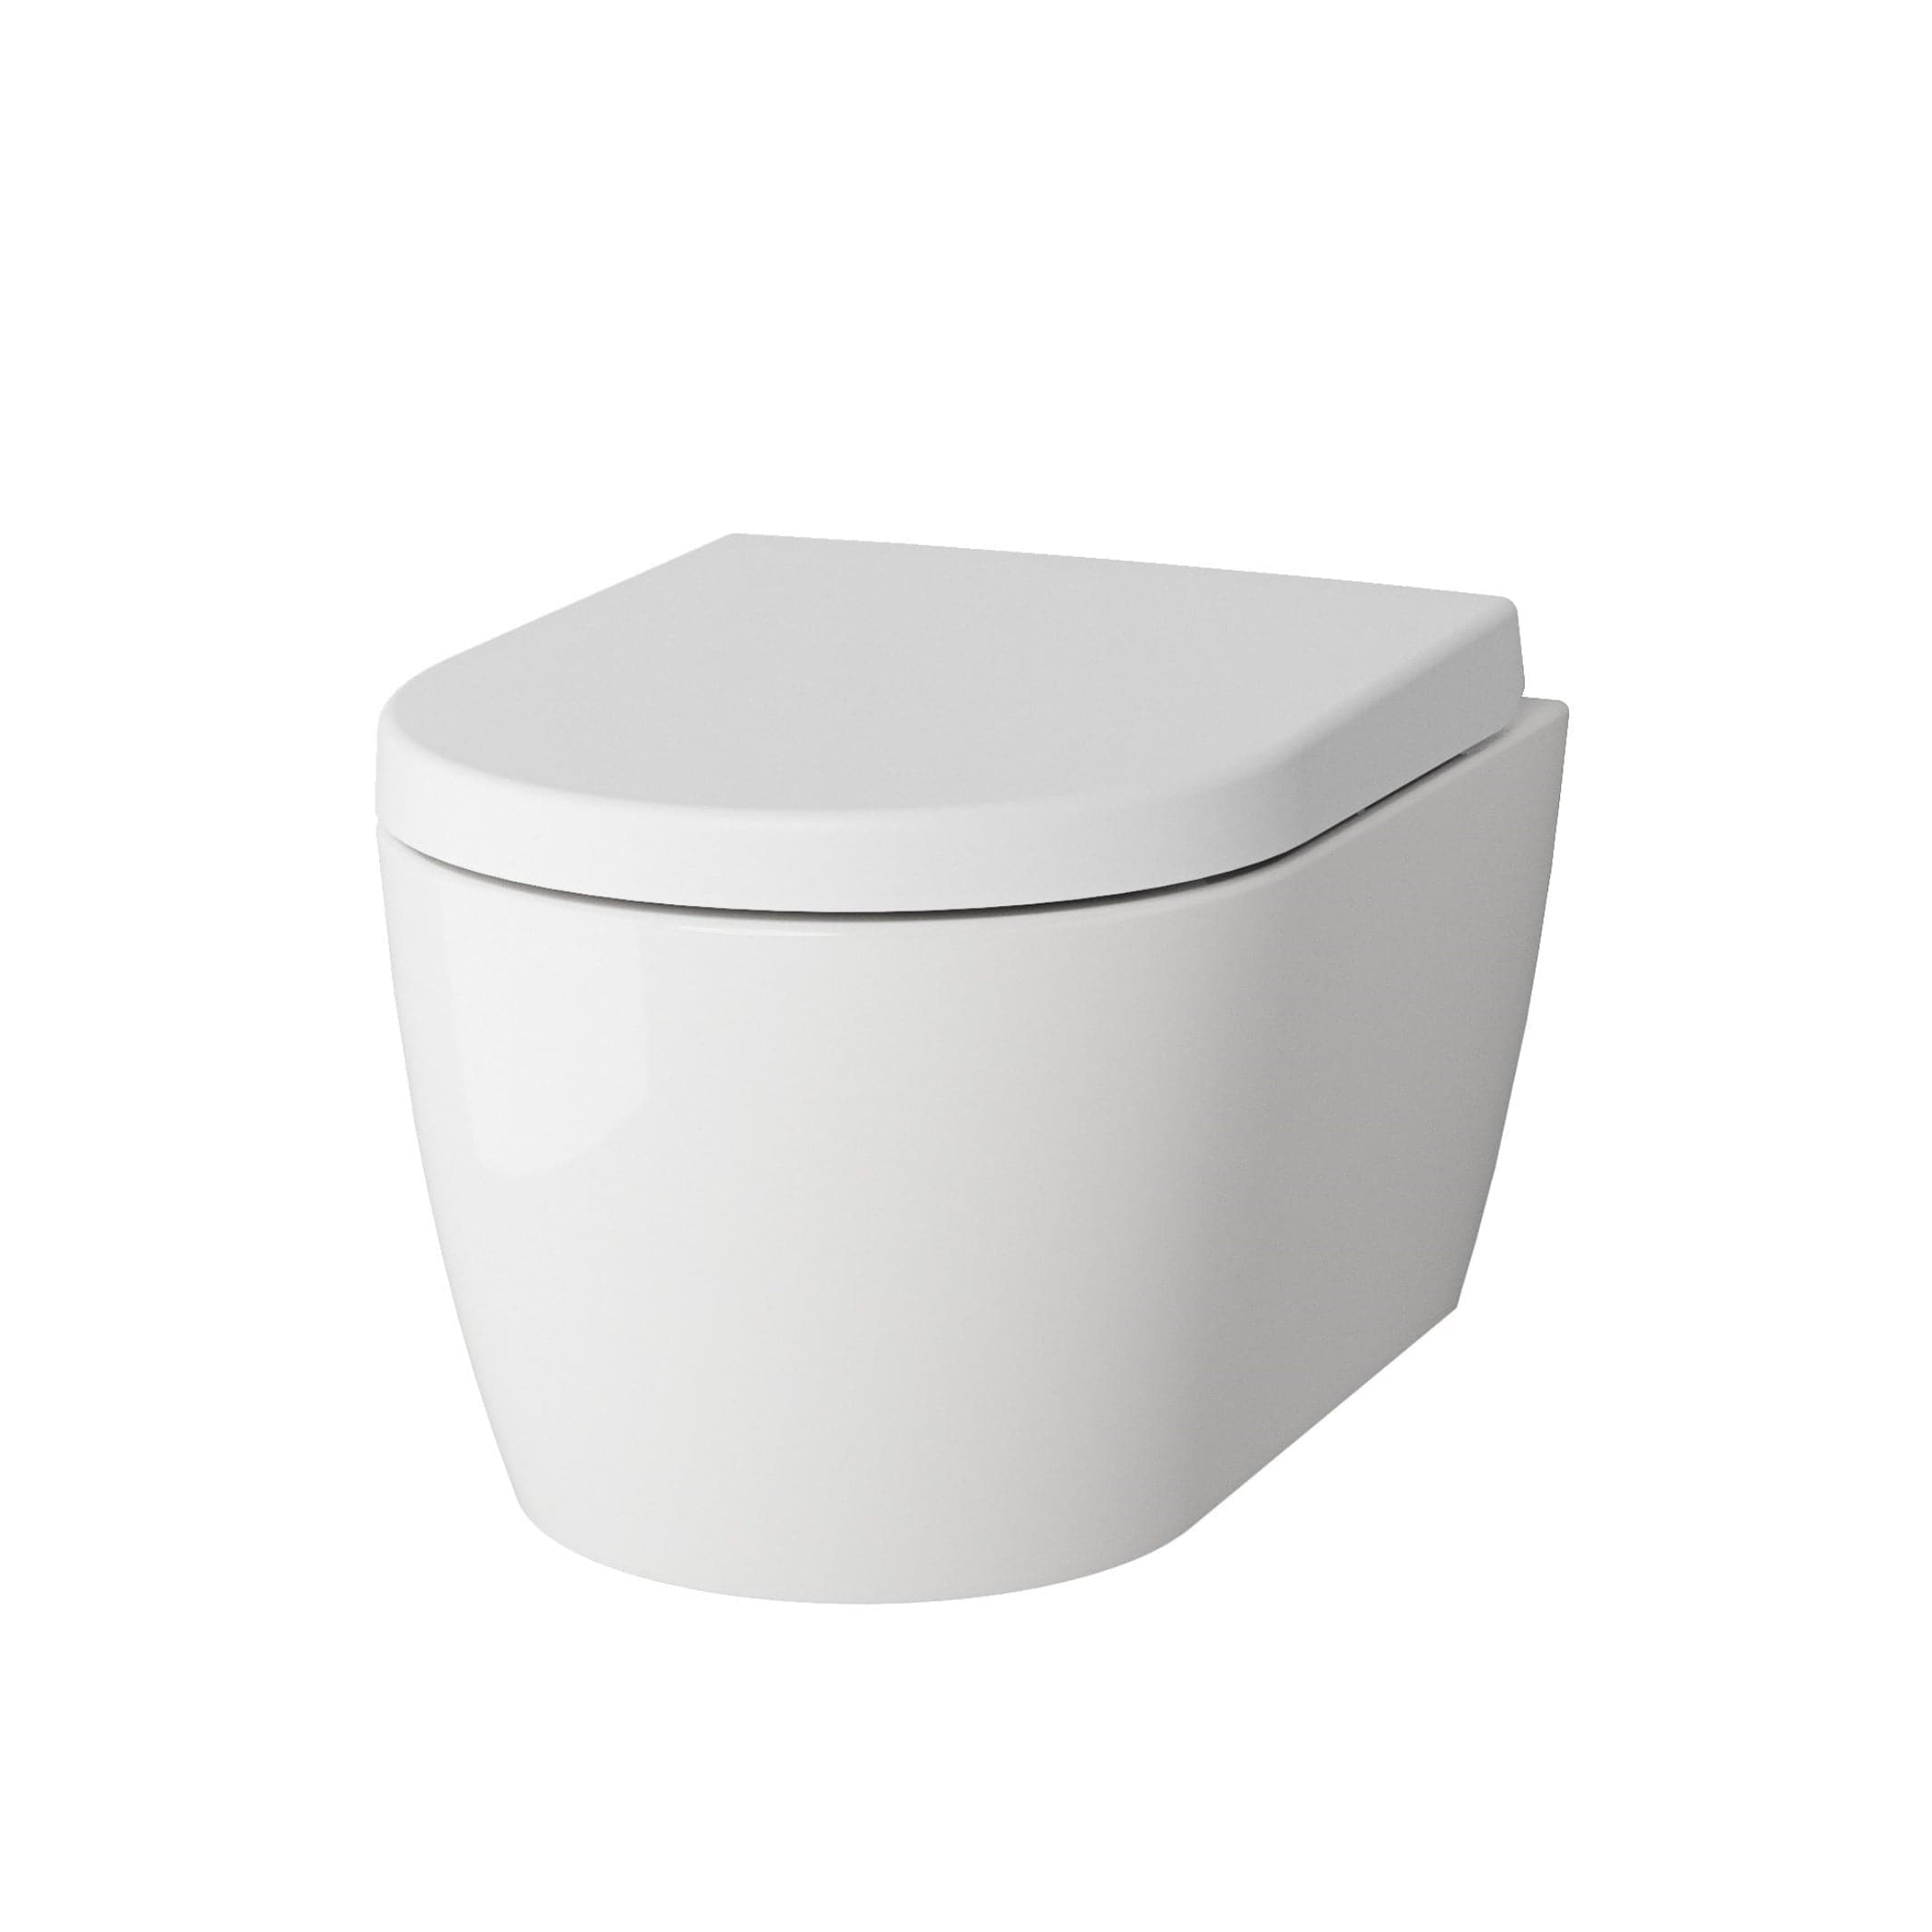 Vikingbad Aida Kompakt Veggskål med Soft-close Sete - Vegghengt Toalett Hvit / Standard Vegghengt toalett